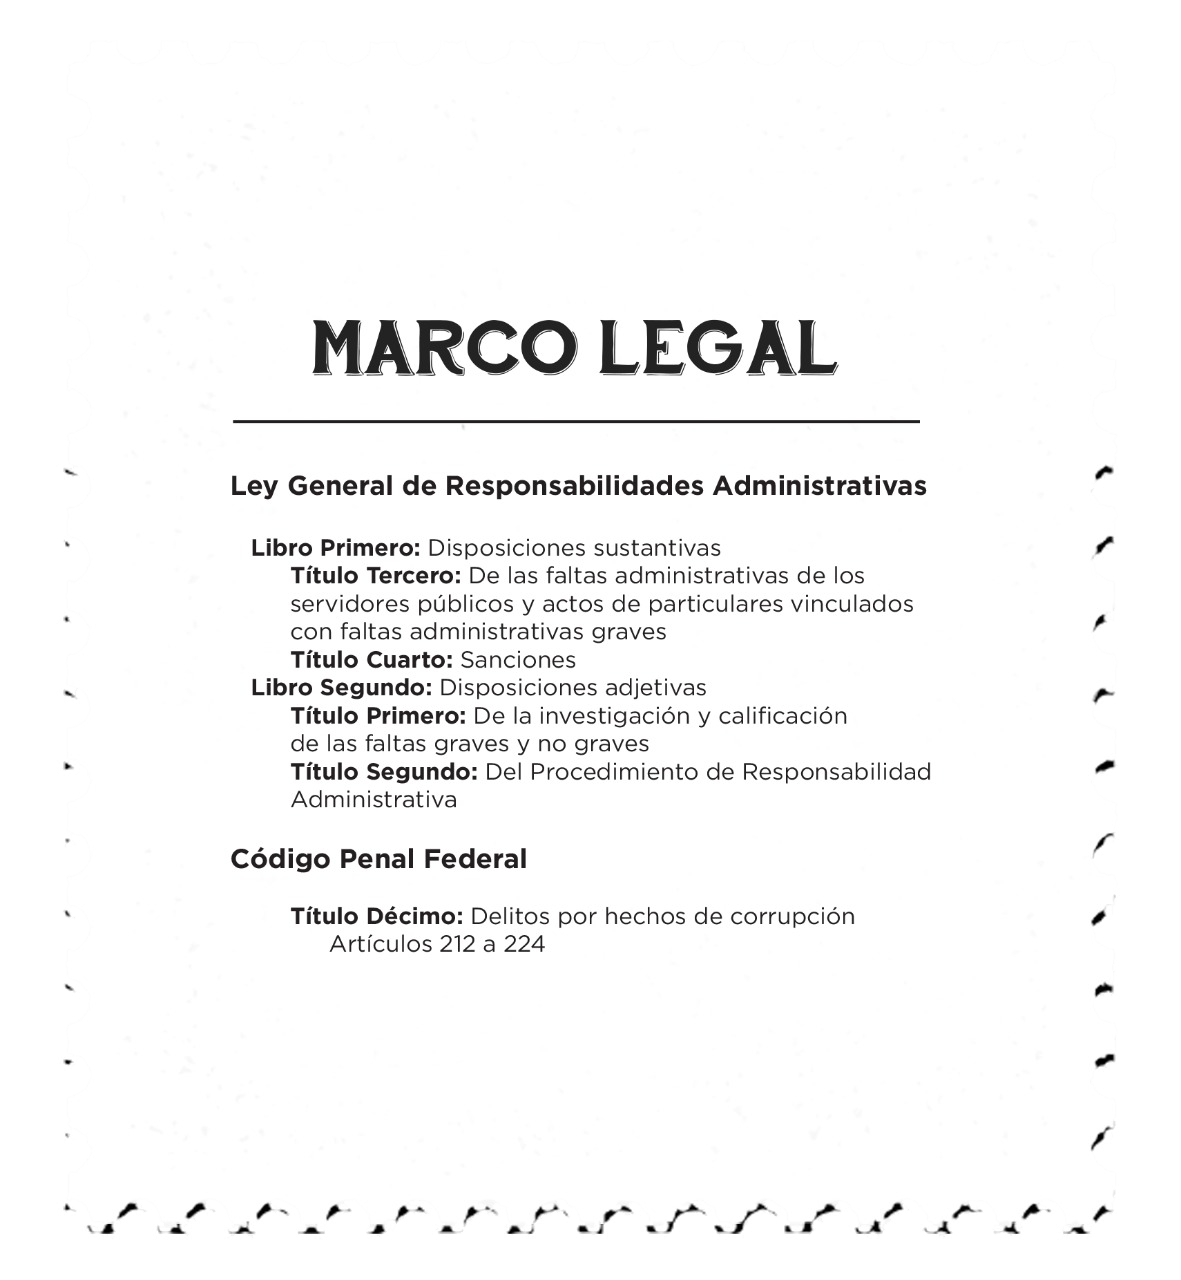 Ley general de responsabilidades administrativas